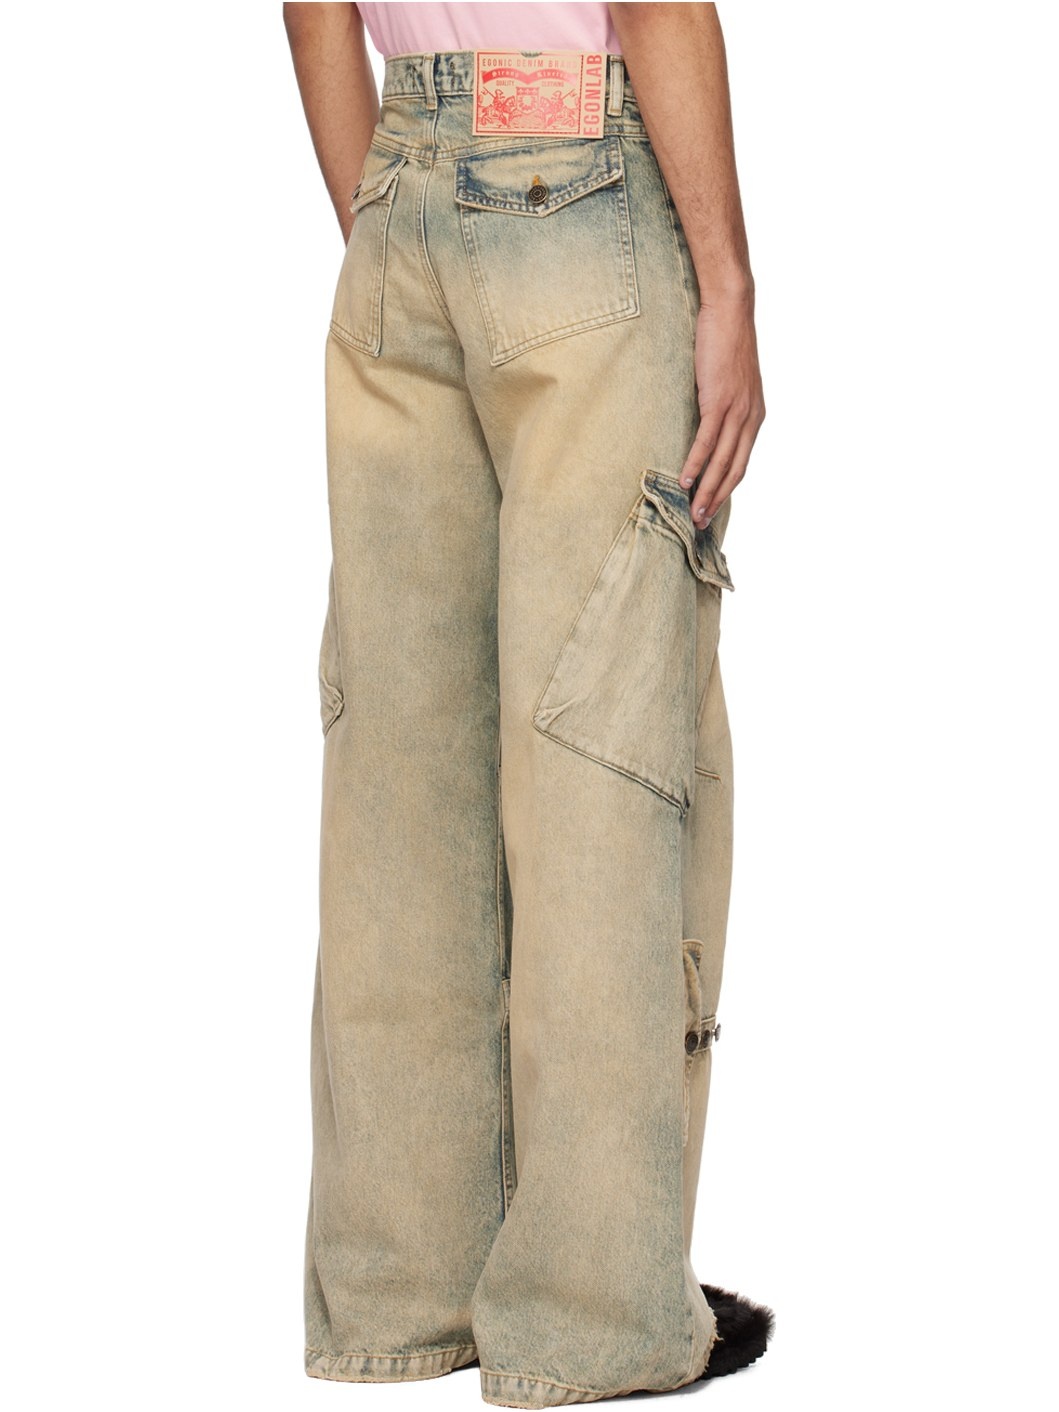 Beige Cargo Pocket Jeans - 3